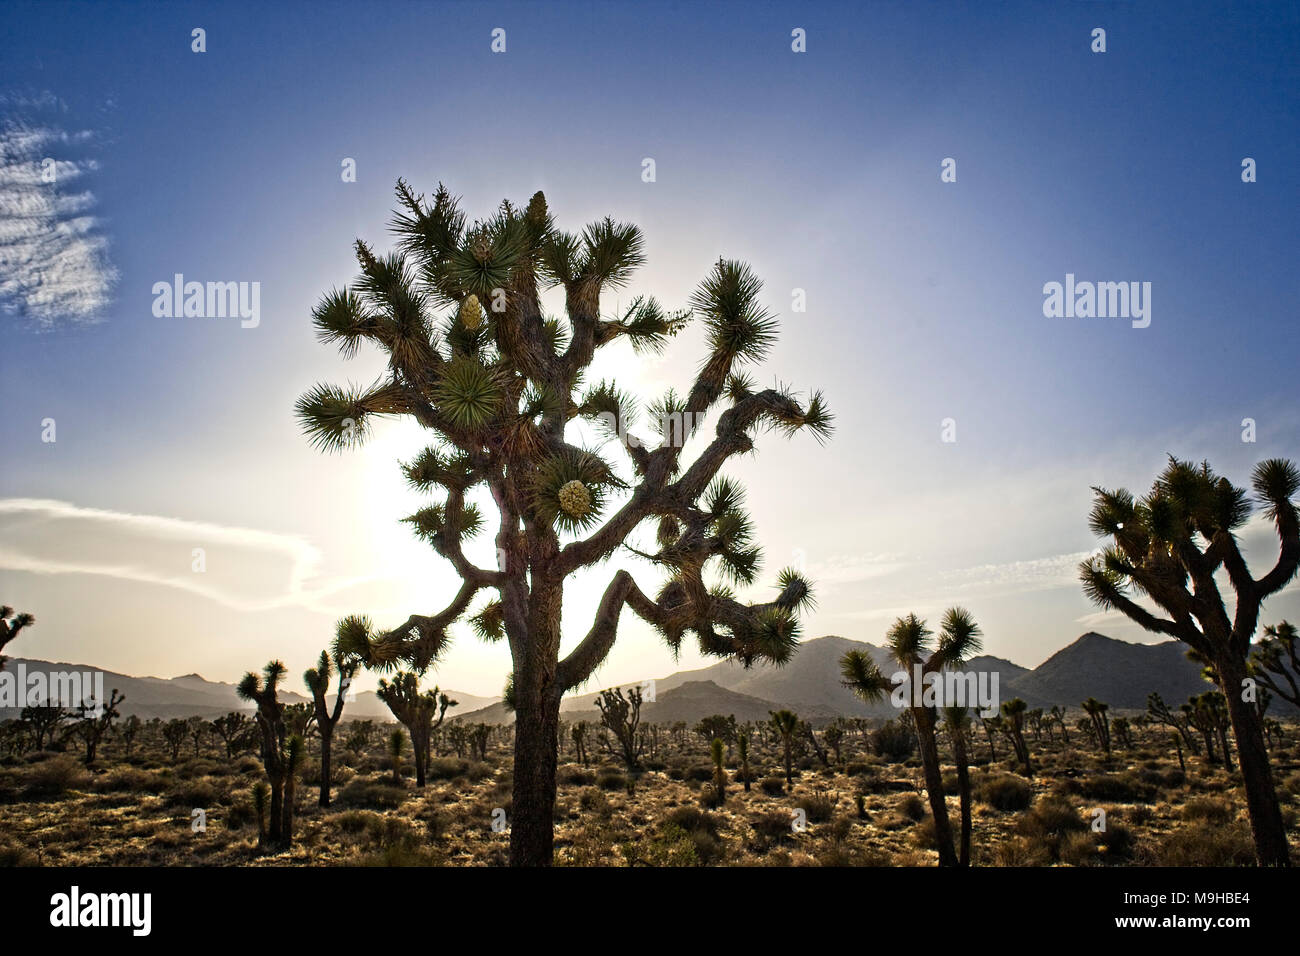 Single Joshua tree in the desert landscape found in Joshua Tree National Park in Southern California's Mojave Desert Stock Photo